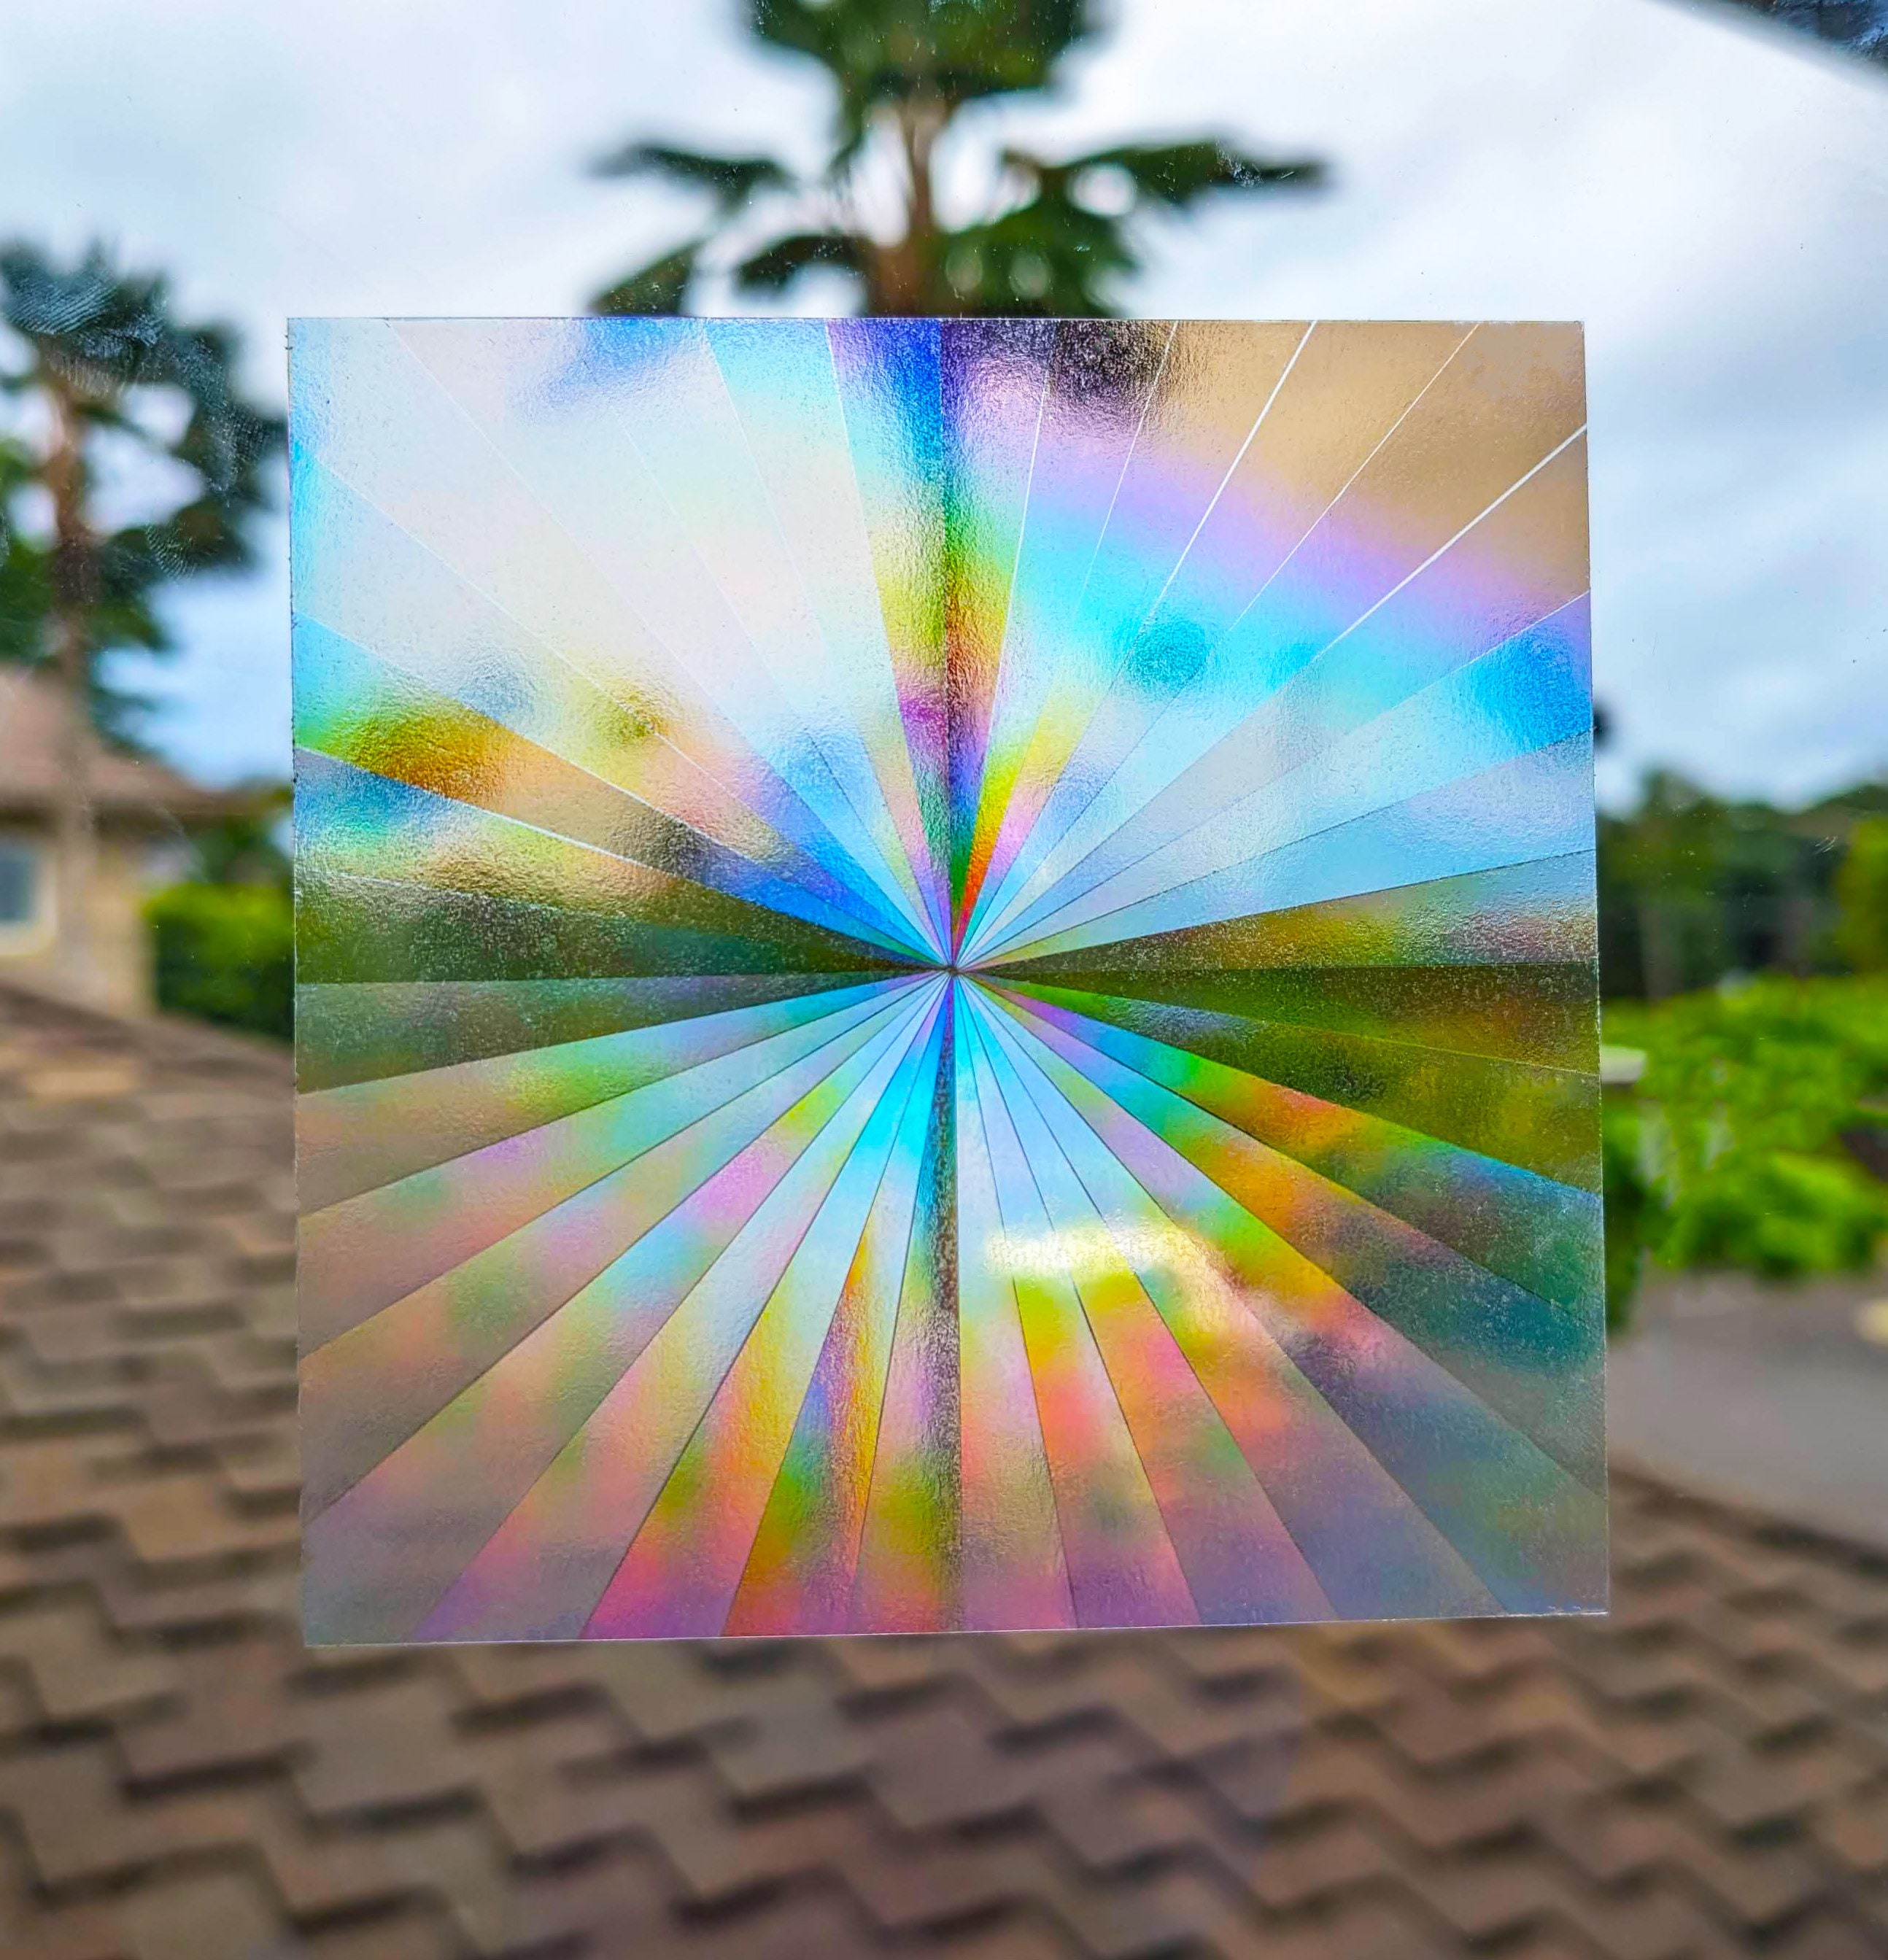  16Pcs Window Clings, Rainbow Window Film Suncatcher Sticker  Reusable Prism Hexagon Window Decals Anti Collision Non Adhesive Prismatic  Vinyl Window Clings for Home Decor (A) : Home & Kitchen